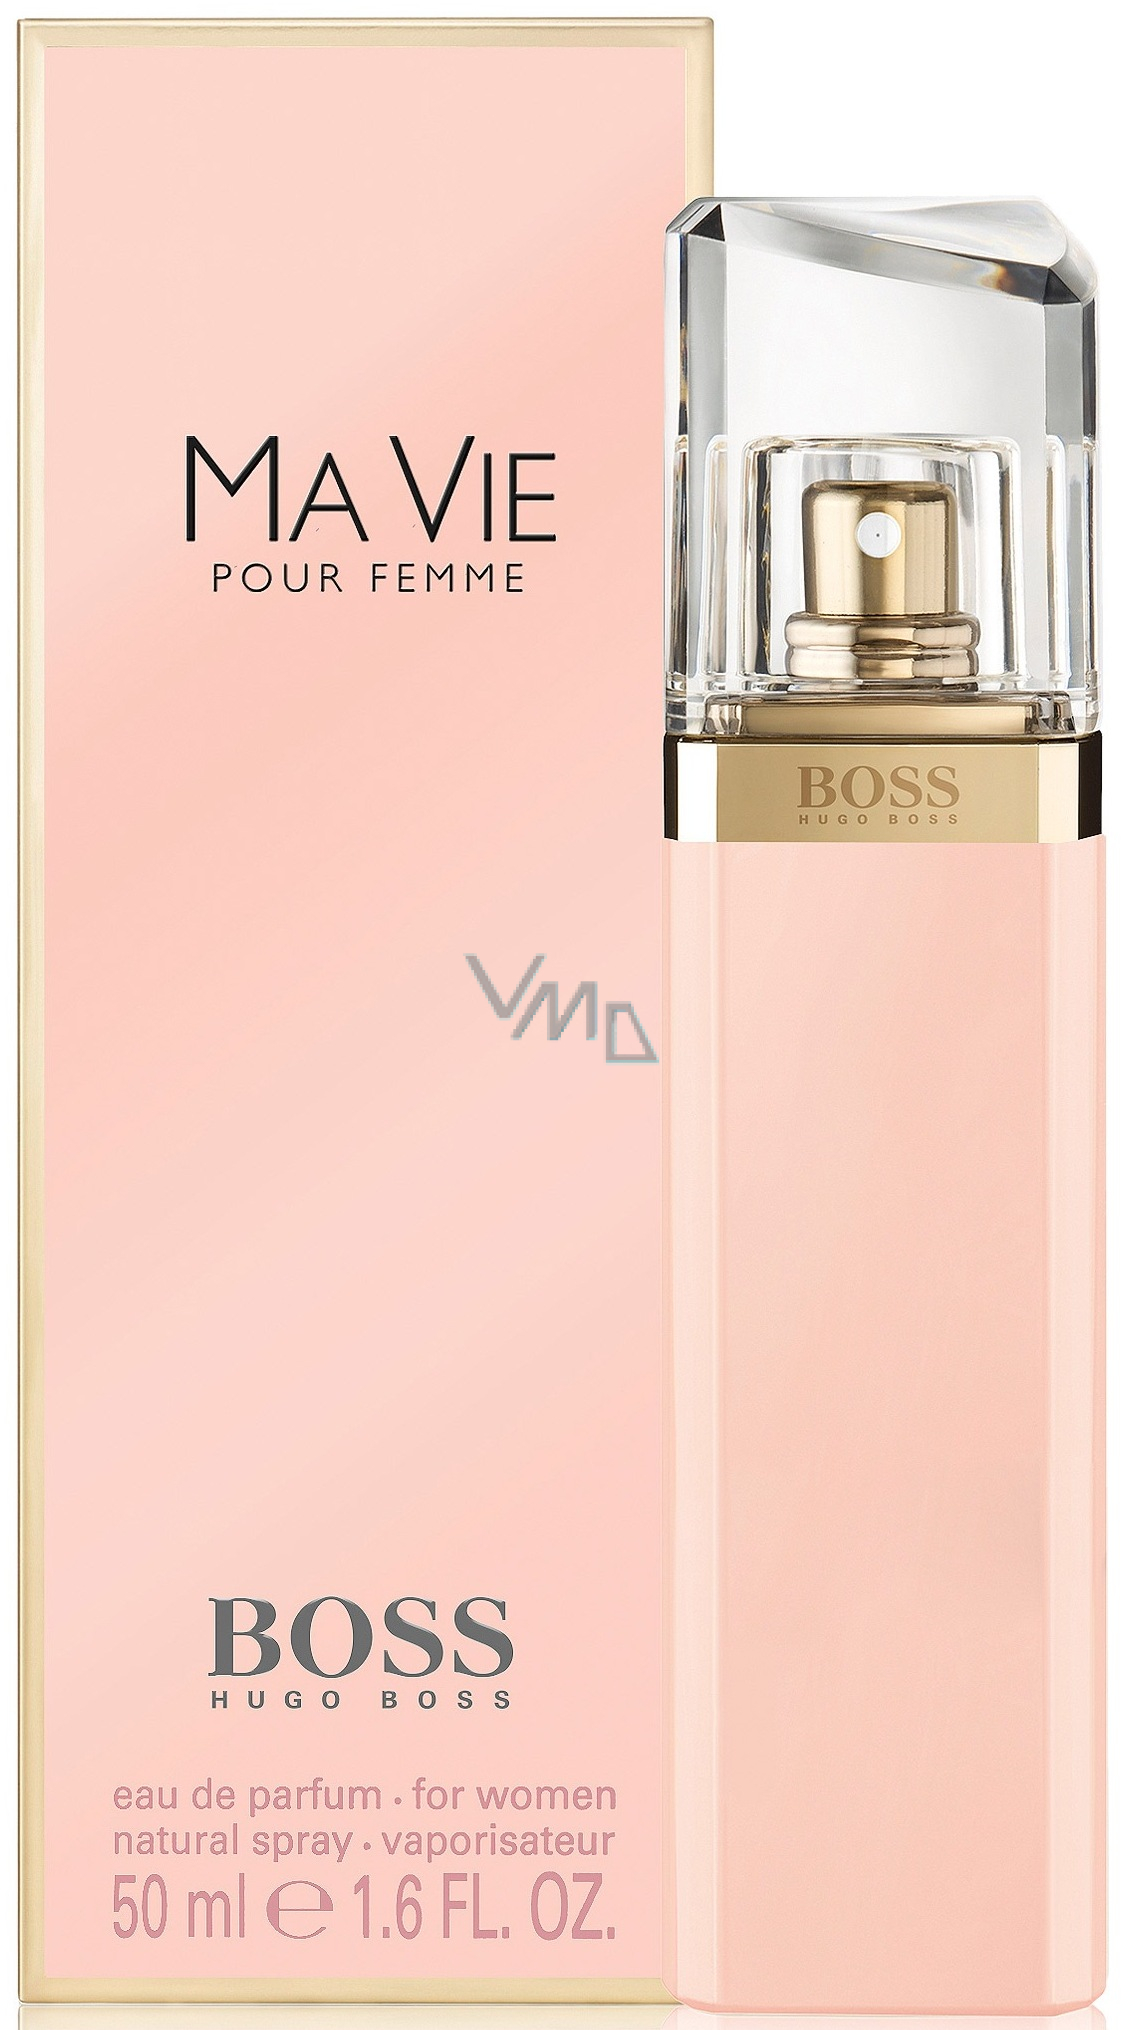 Verrijken voor de hand liggend manager Hugo Boss Ma Vie pour Femme Eau de Parfum 50 ml - VMD parfumerie - drogerie